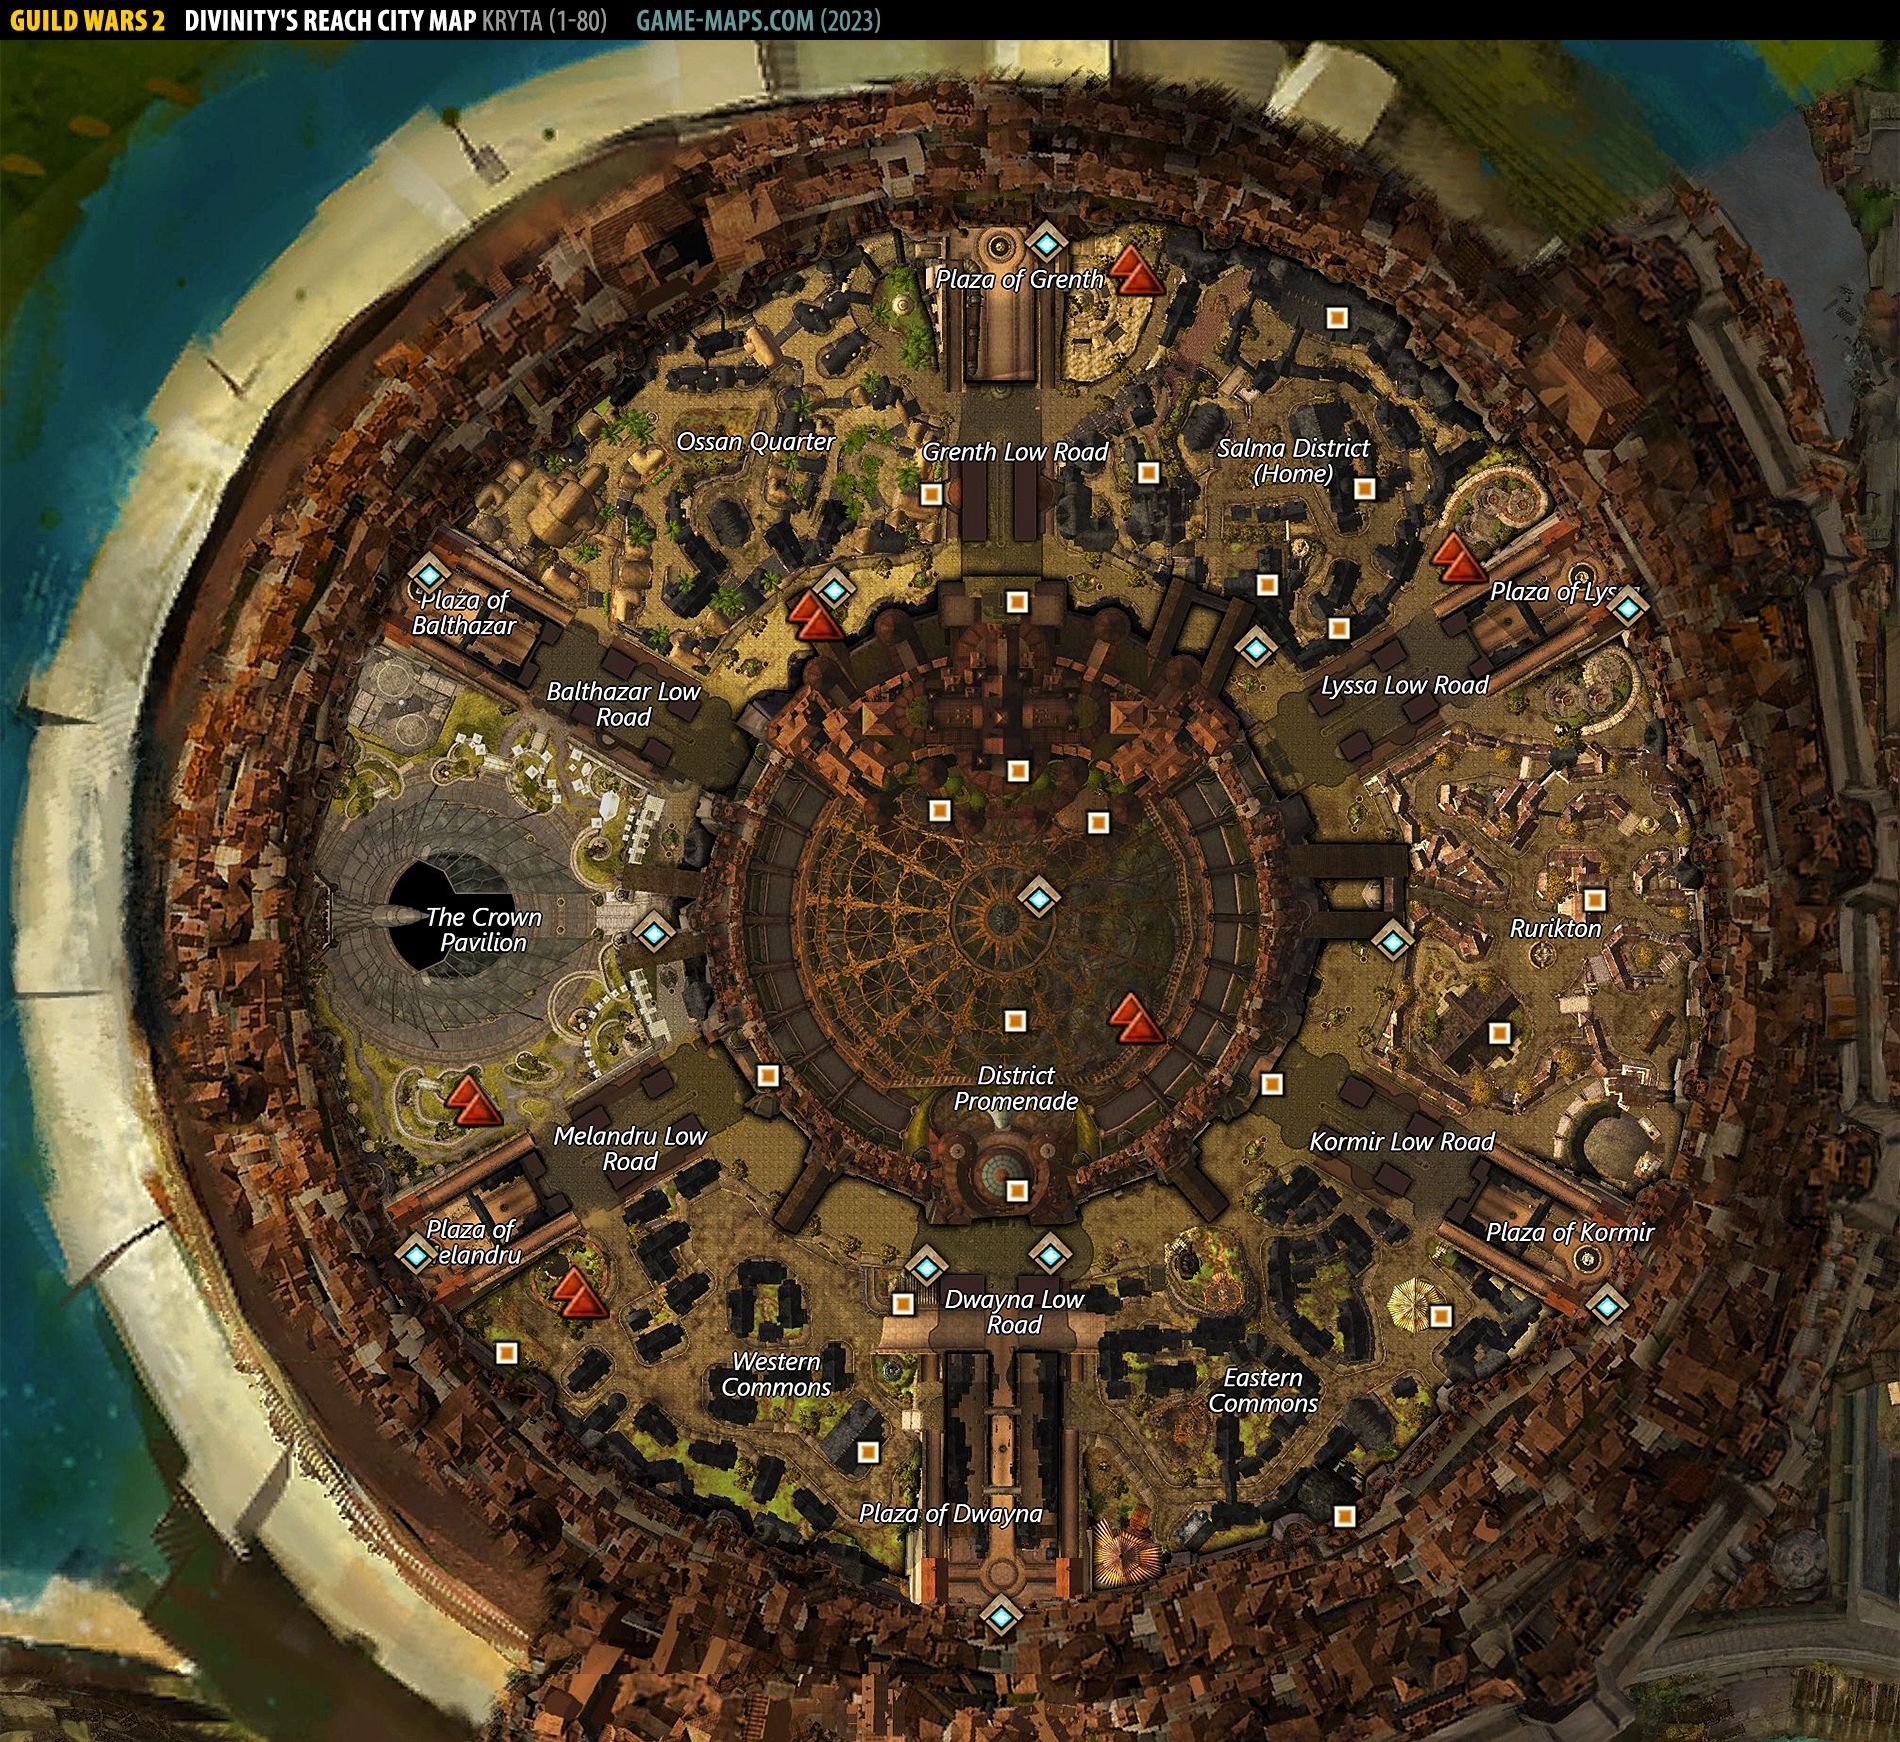 Divinity's Reach City Map Guild Wars 2